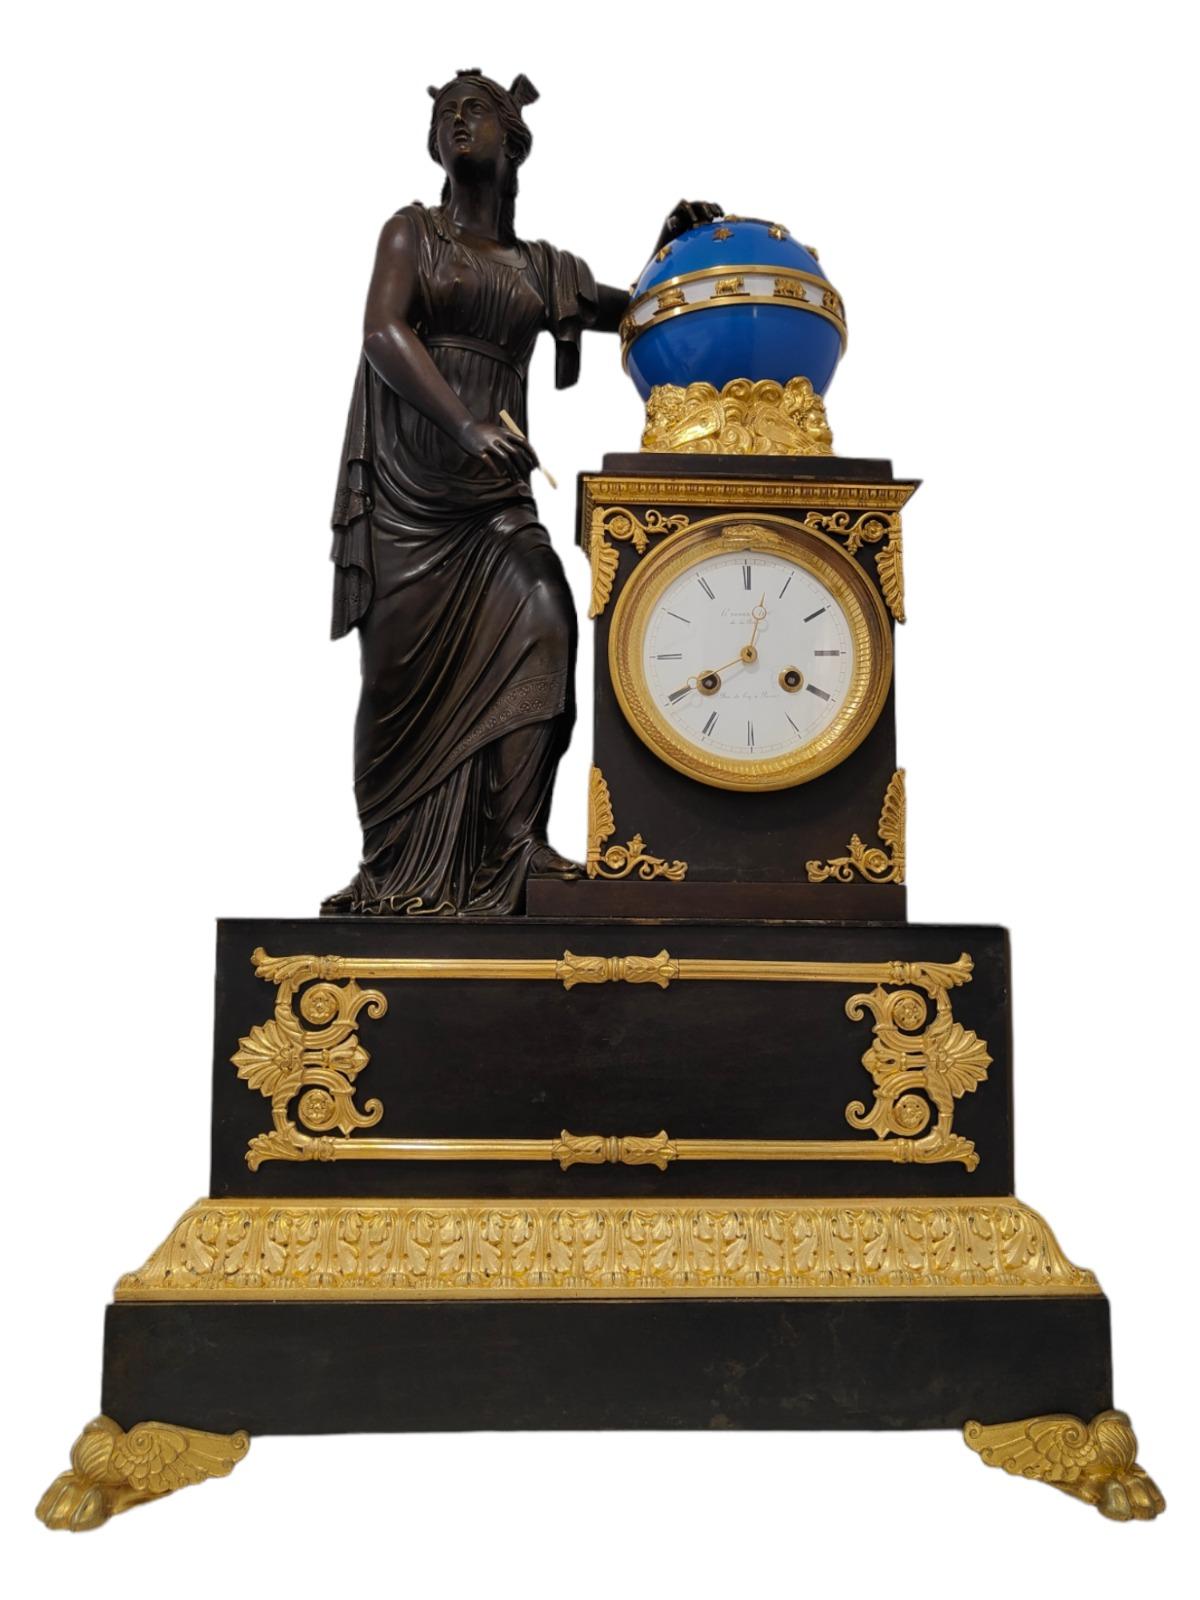 An Empire Mantel Clock by H.Robert-Horloger De La Reine, Paris, date circa 1820-1830
A superb Empire gilt and patinated bronze mantel clock of eight day duration signed on the white enamel dial H.Robert-Horloger a la Reine . The dial with Roman